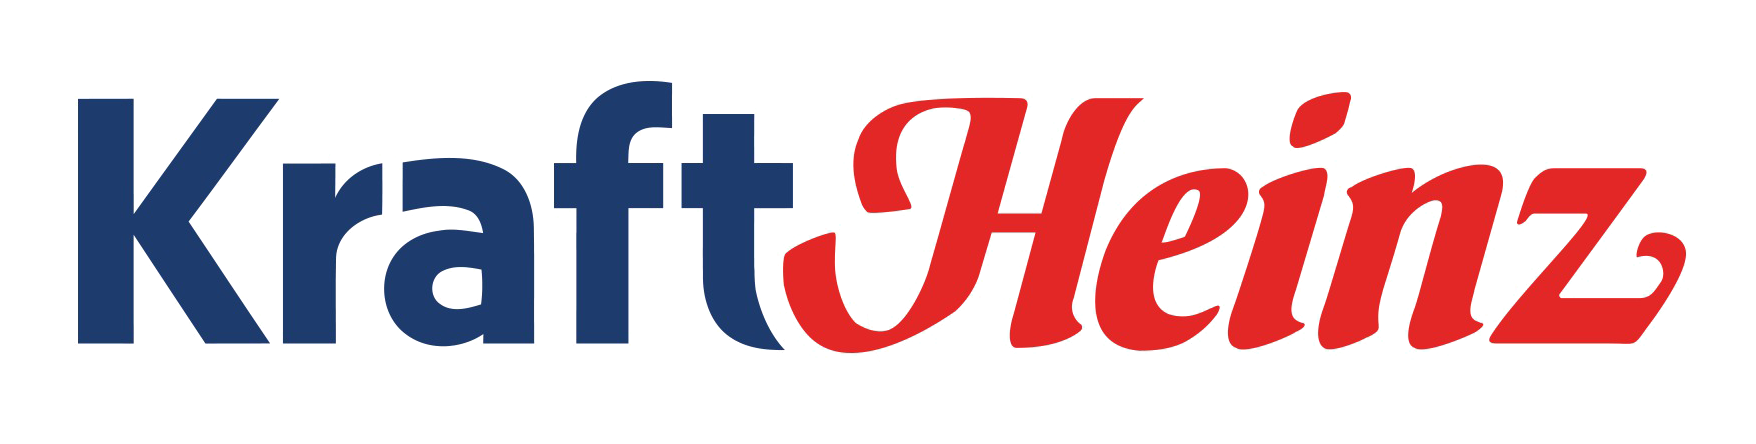 Download Kraft Heinz Logo Png Image For Free